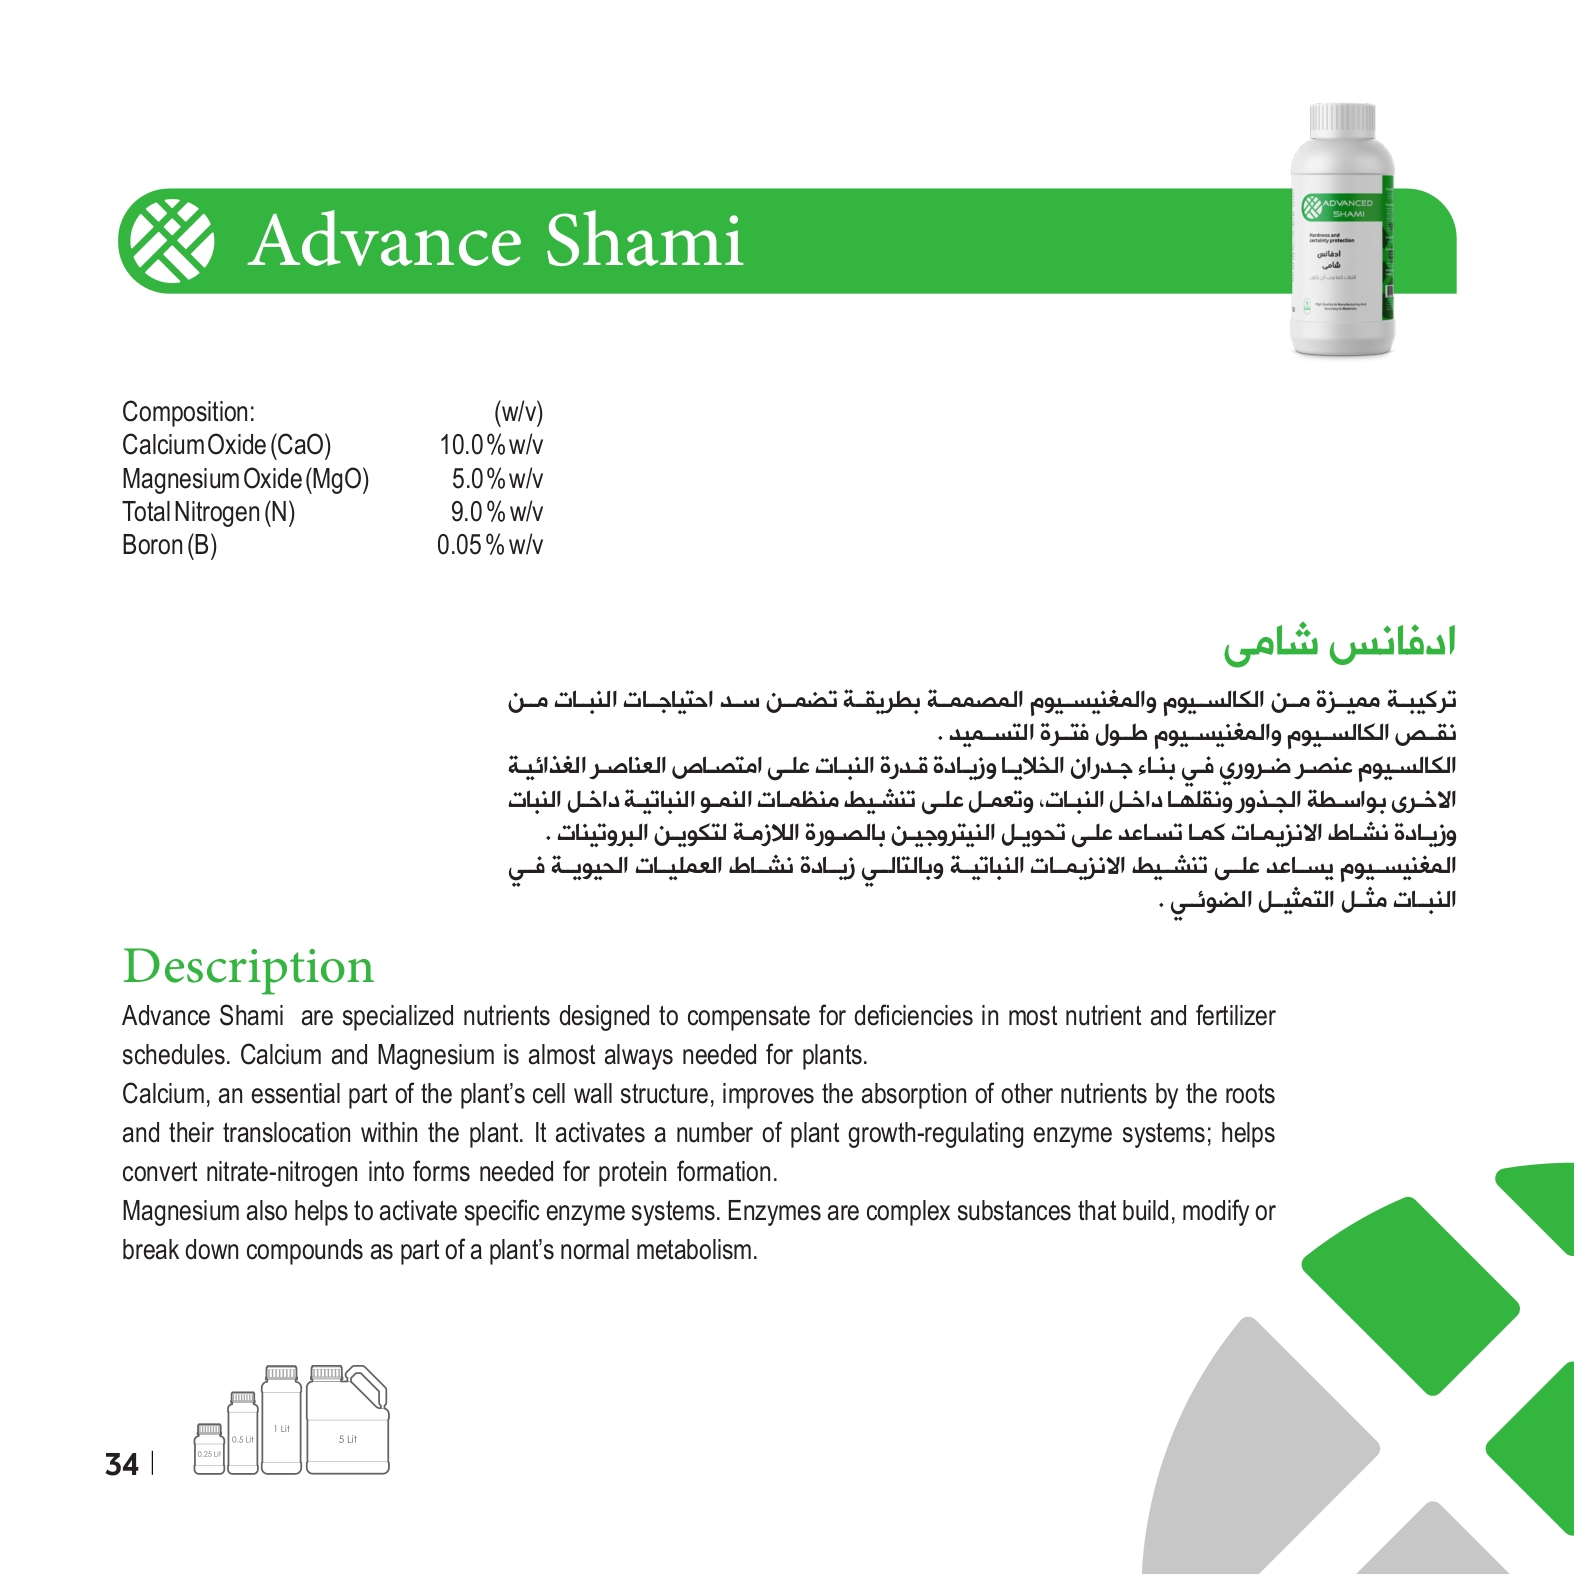 Advance Shami